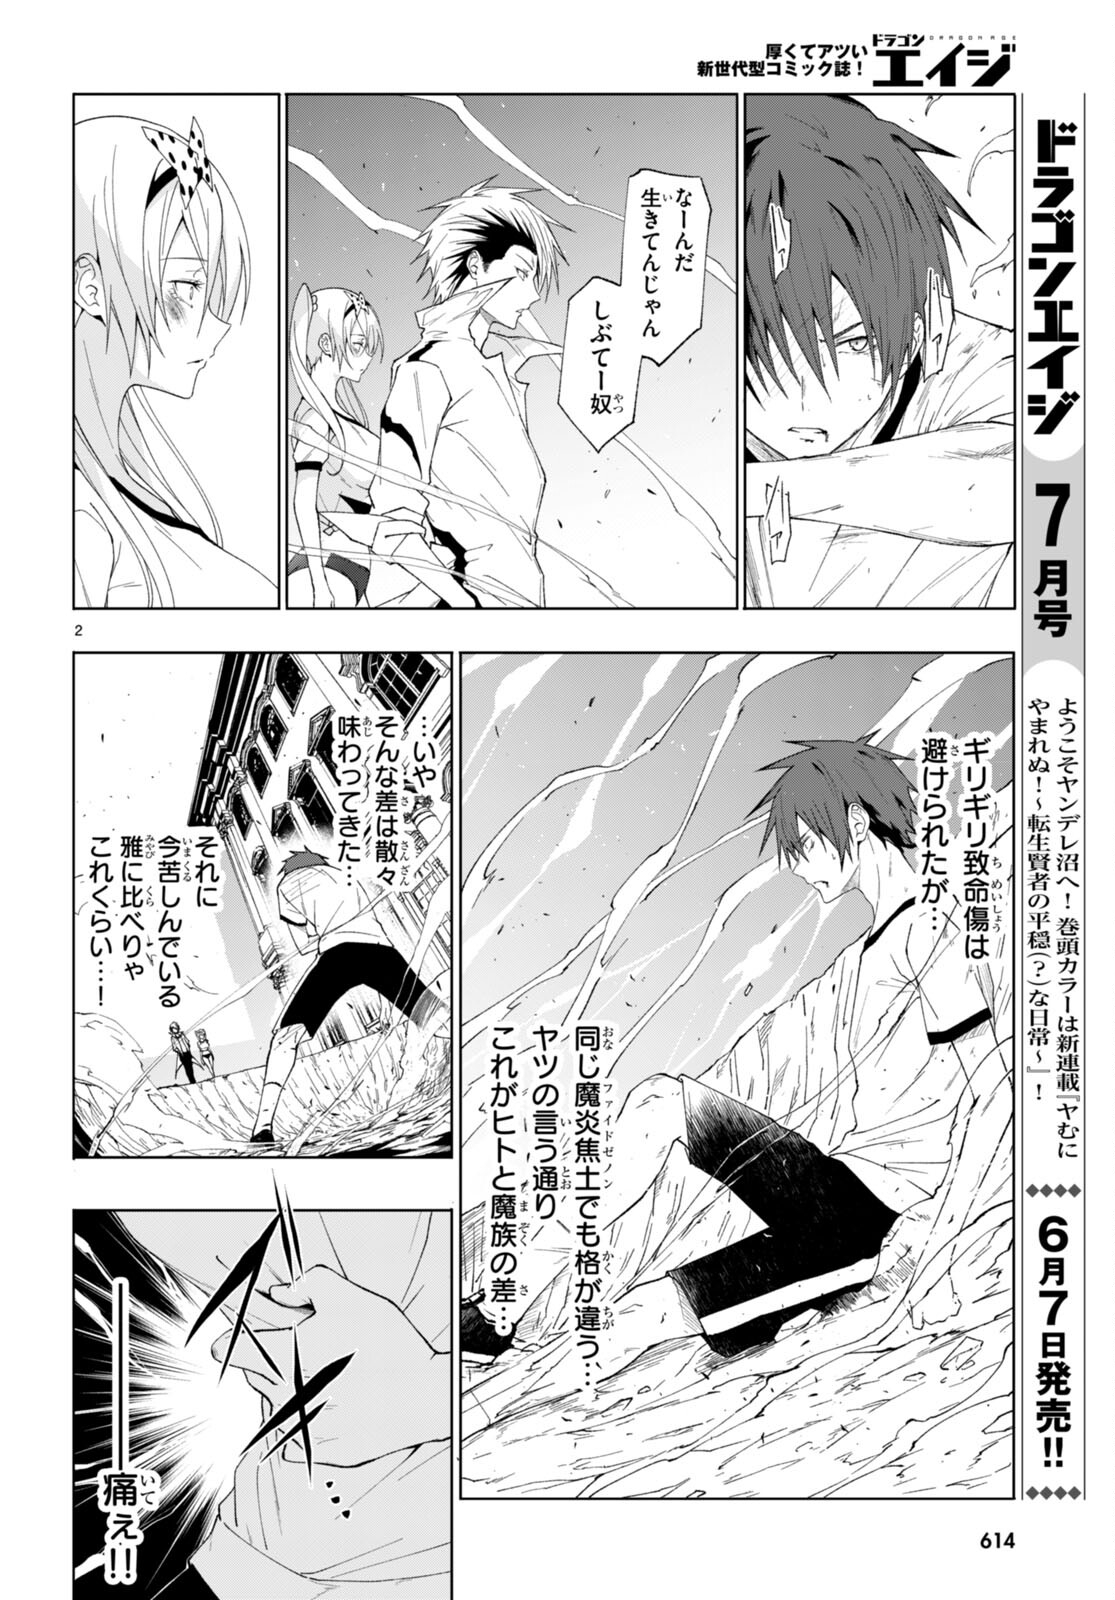 Maou Gakuen no Hangyakusha - Chapter 43 - Page 2